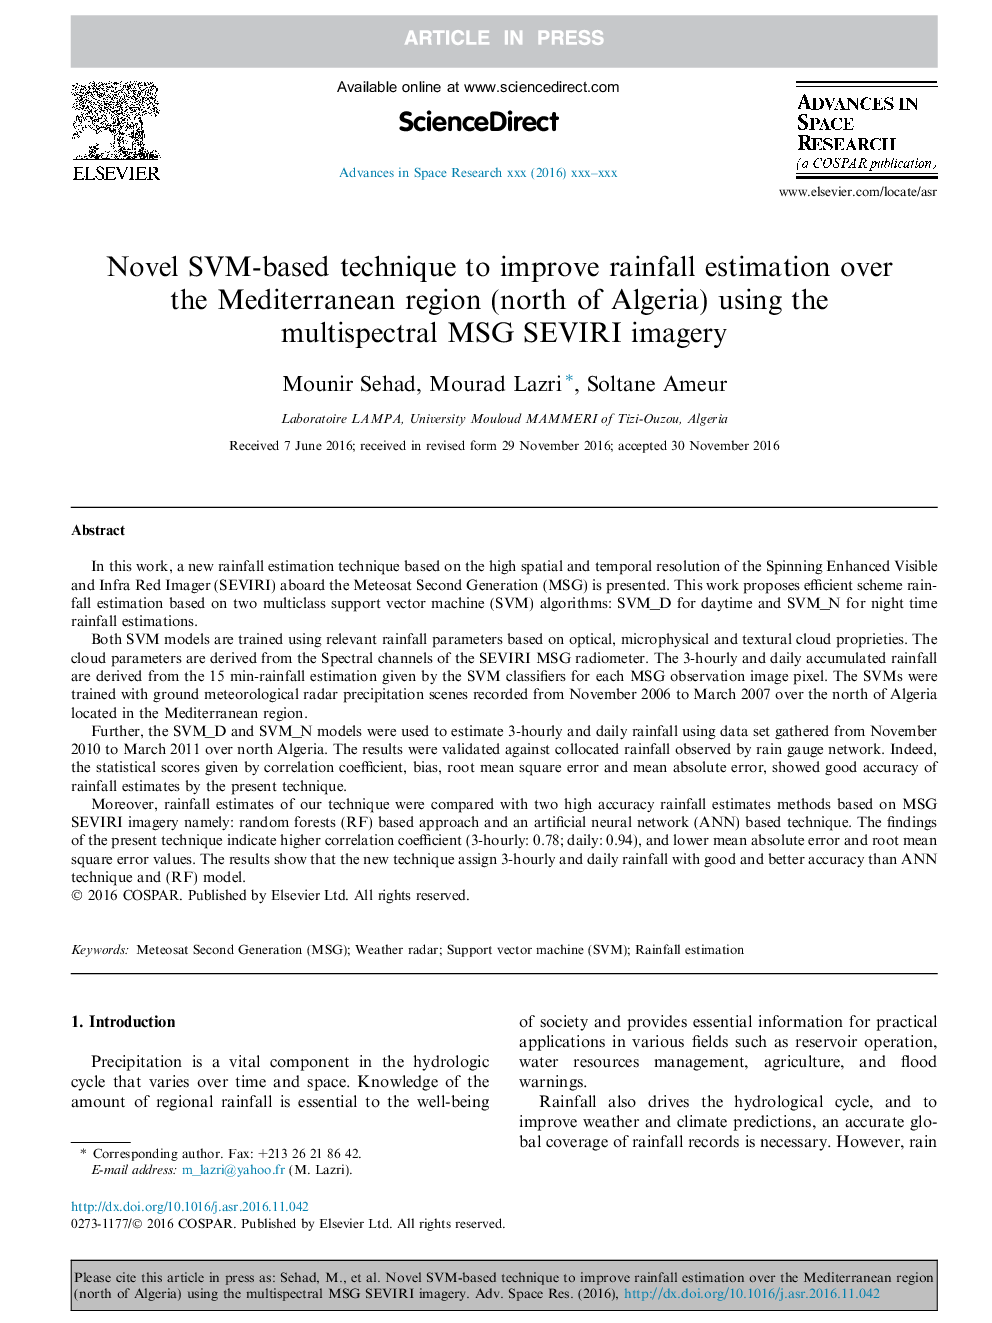 Novel SVM-based technique to improve rainfall estimation over the Mediterranean region (north of Algeria) using the multispectral MSG SEVIRI imagery